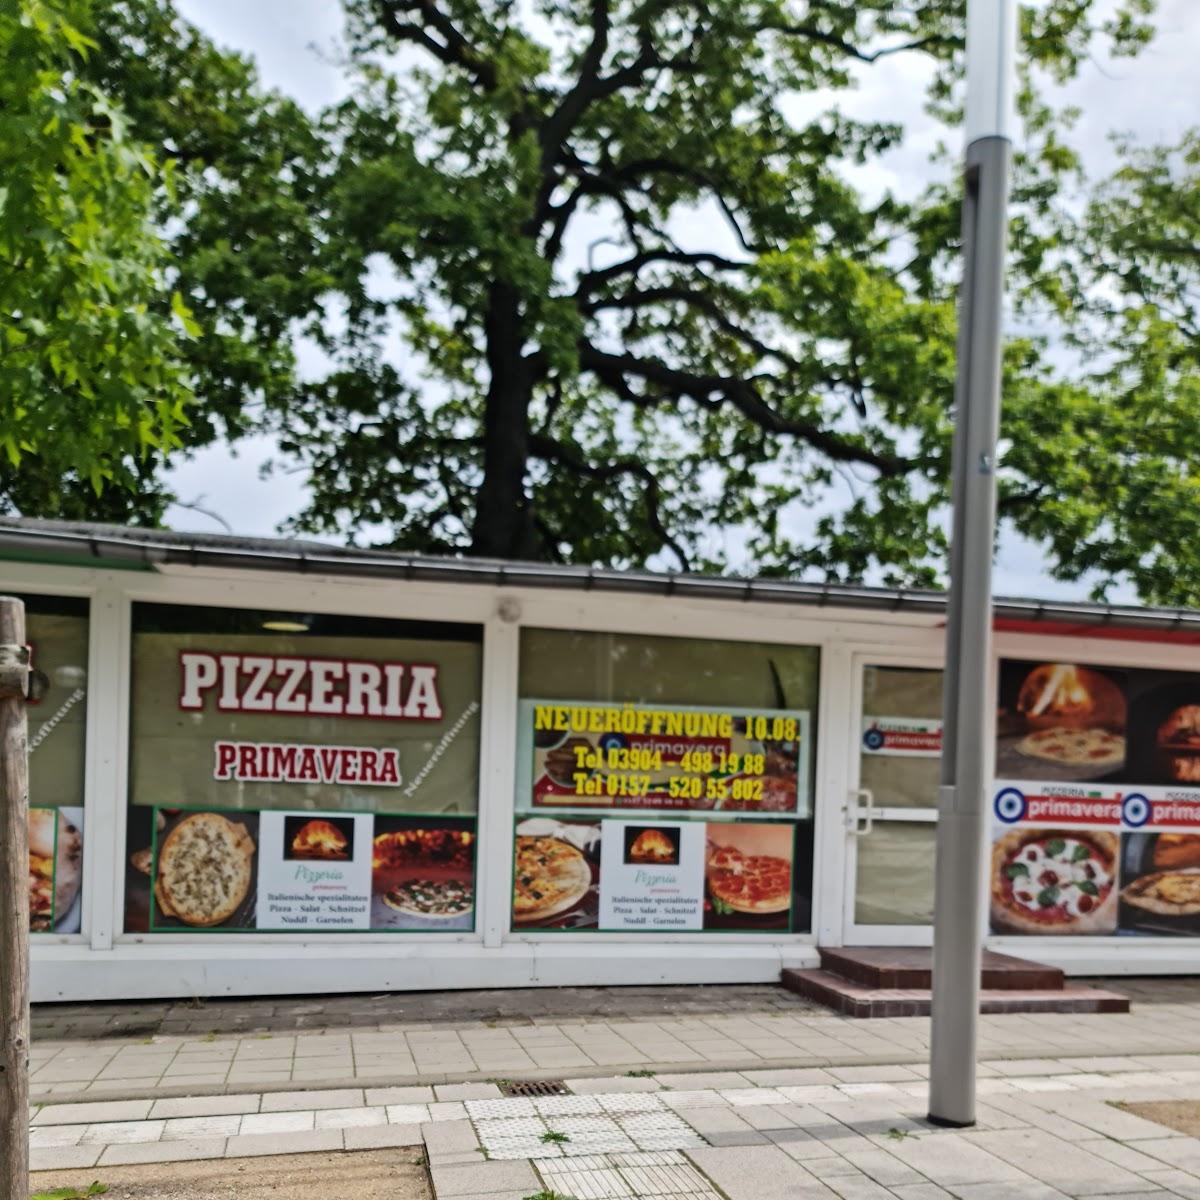 Restaurant "Pizzeria primavera" in Haldensleben